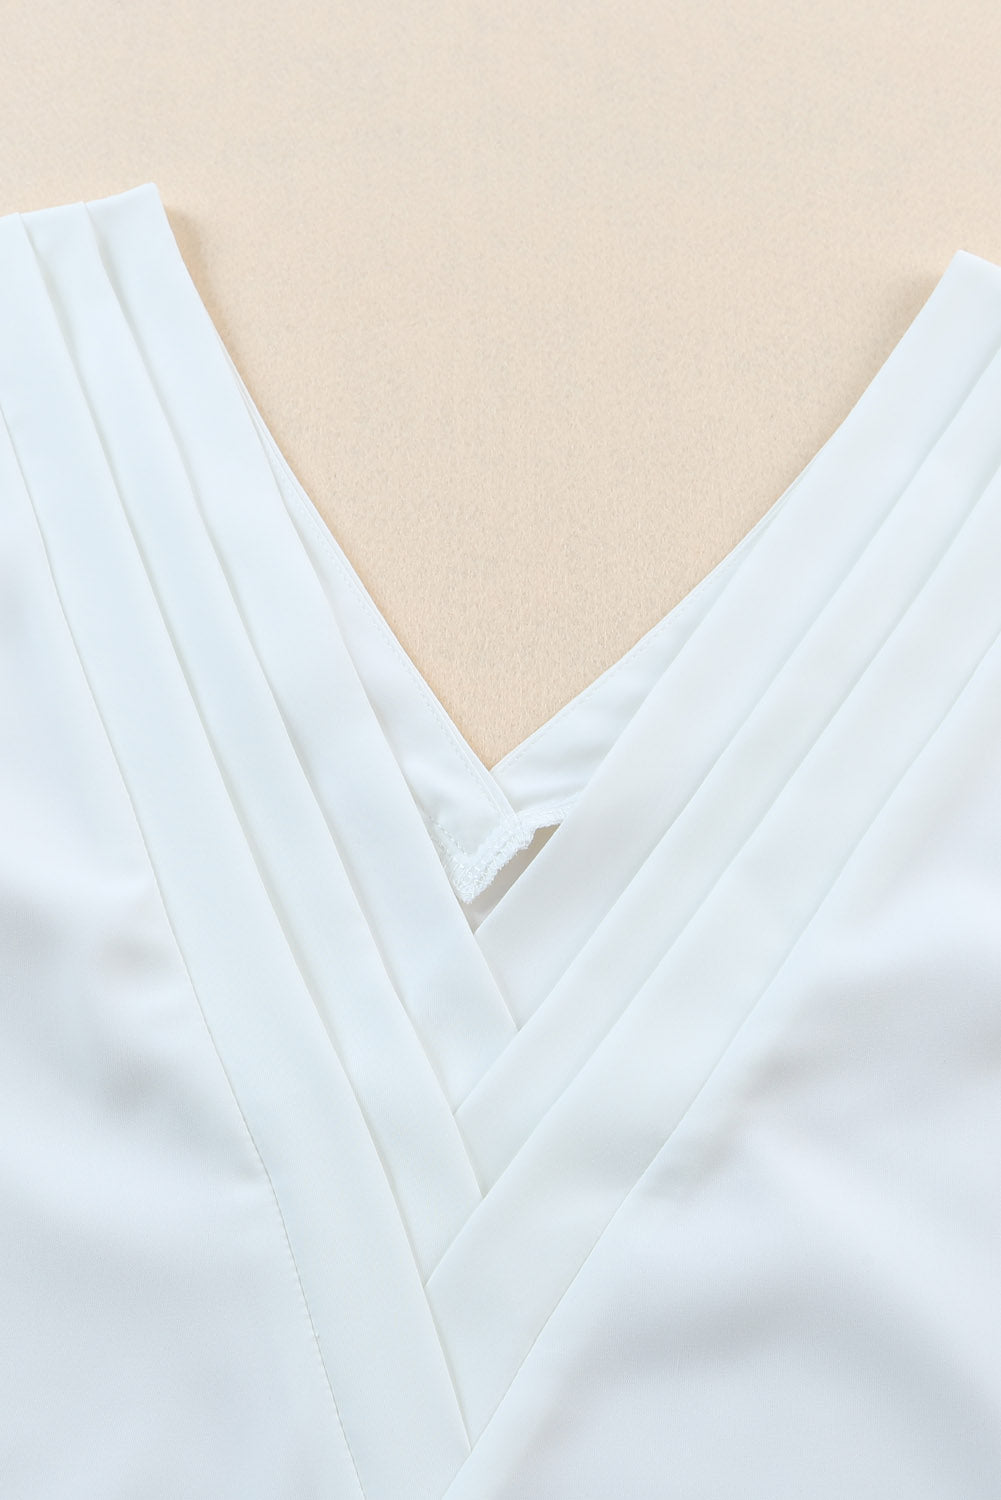 White Pleated Backless V Neck Sleeveless Shirt